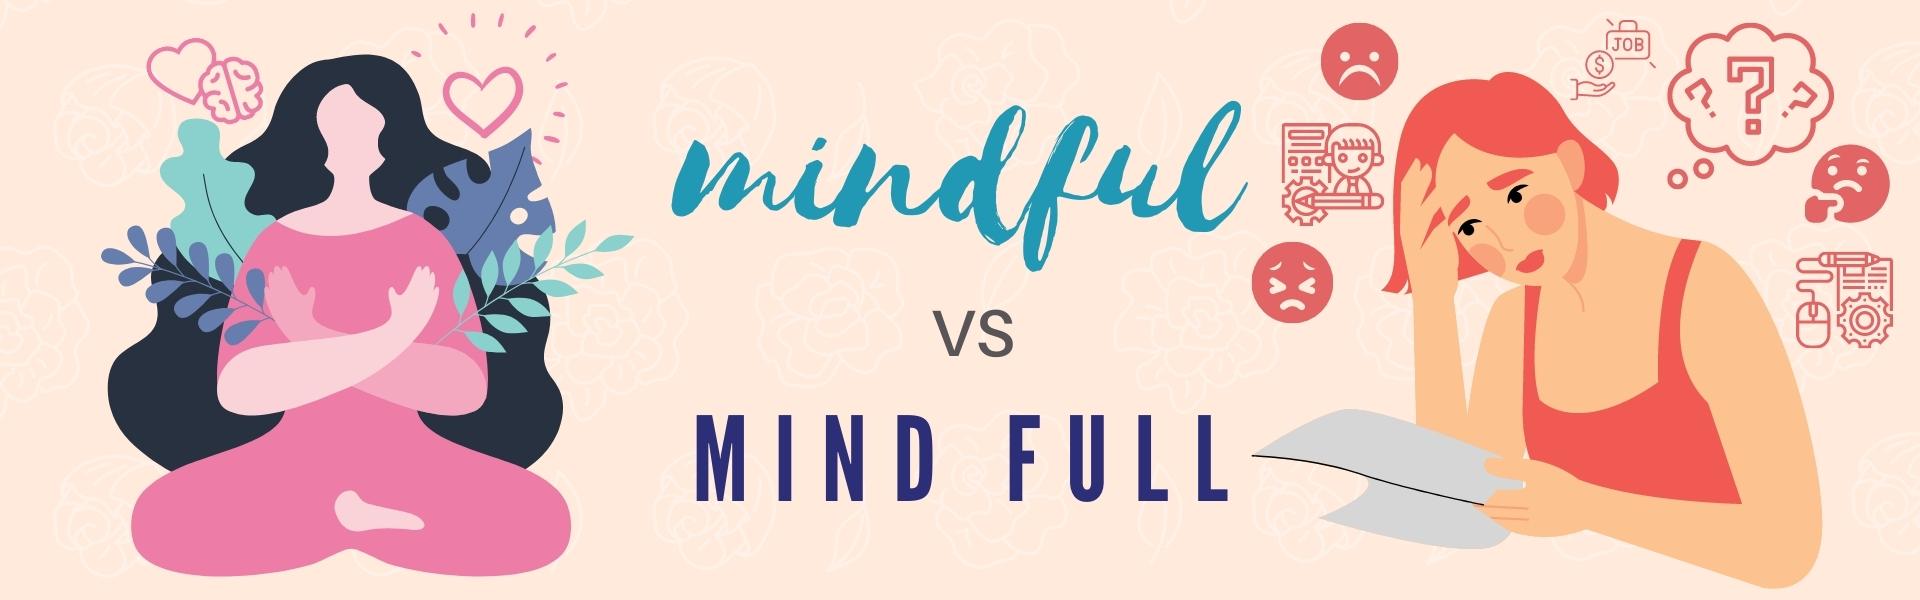 Achieving Mindfulness Blog Header